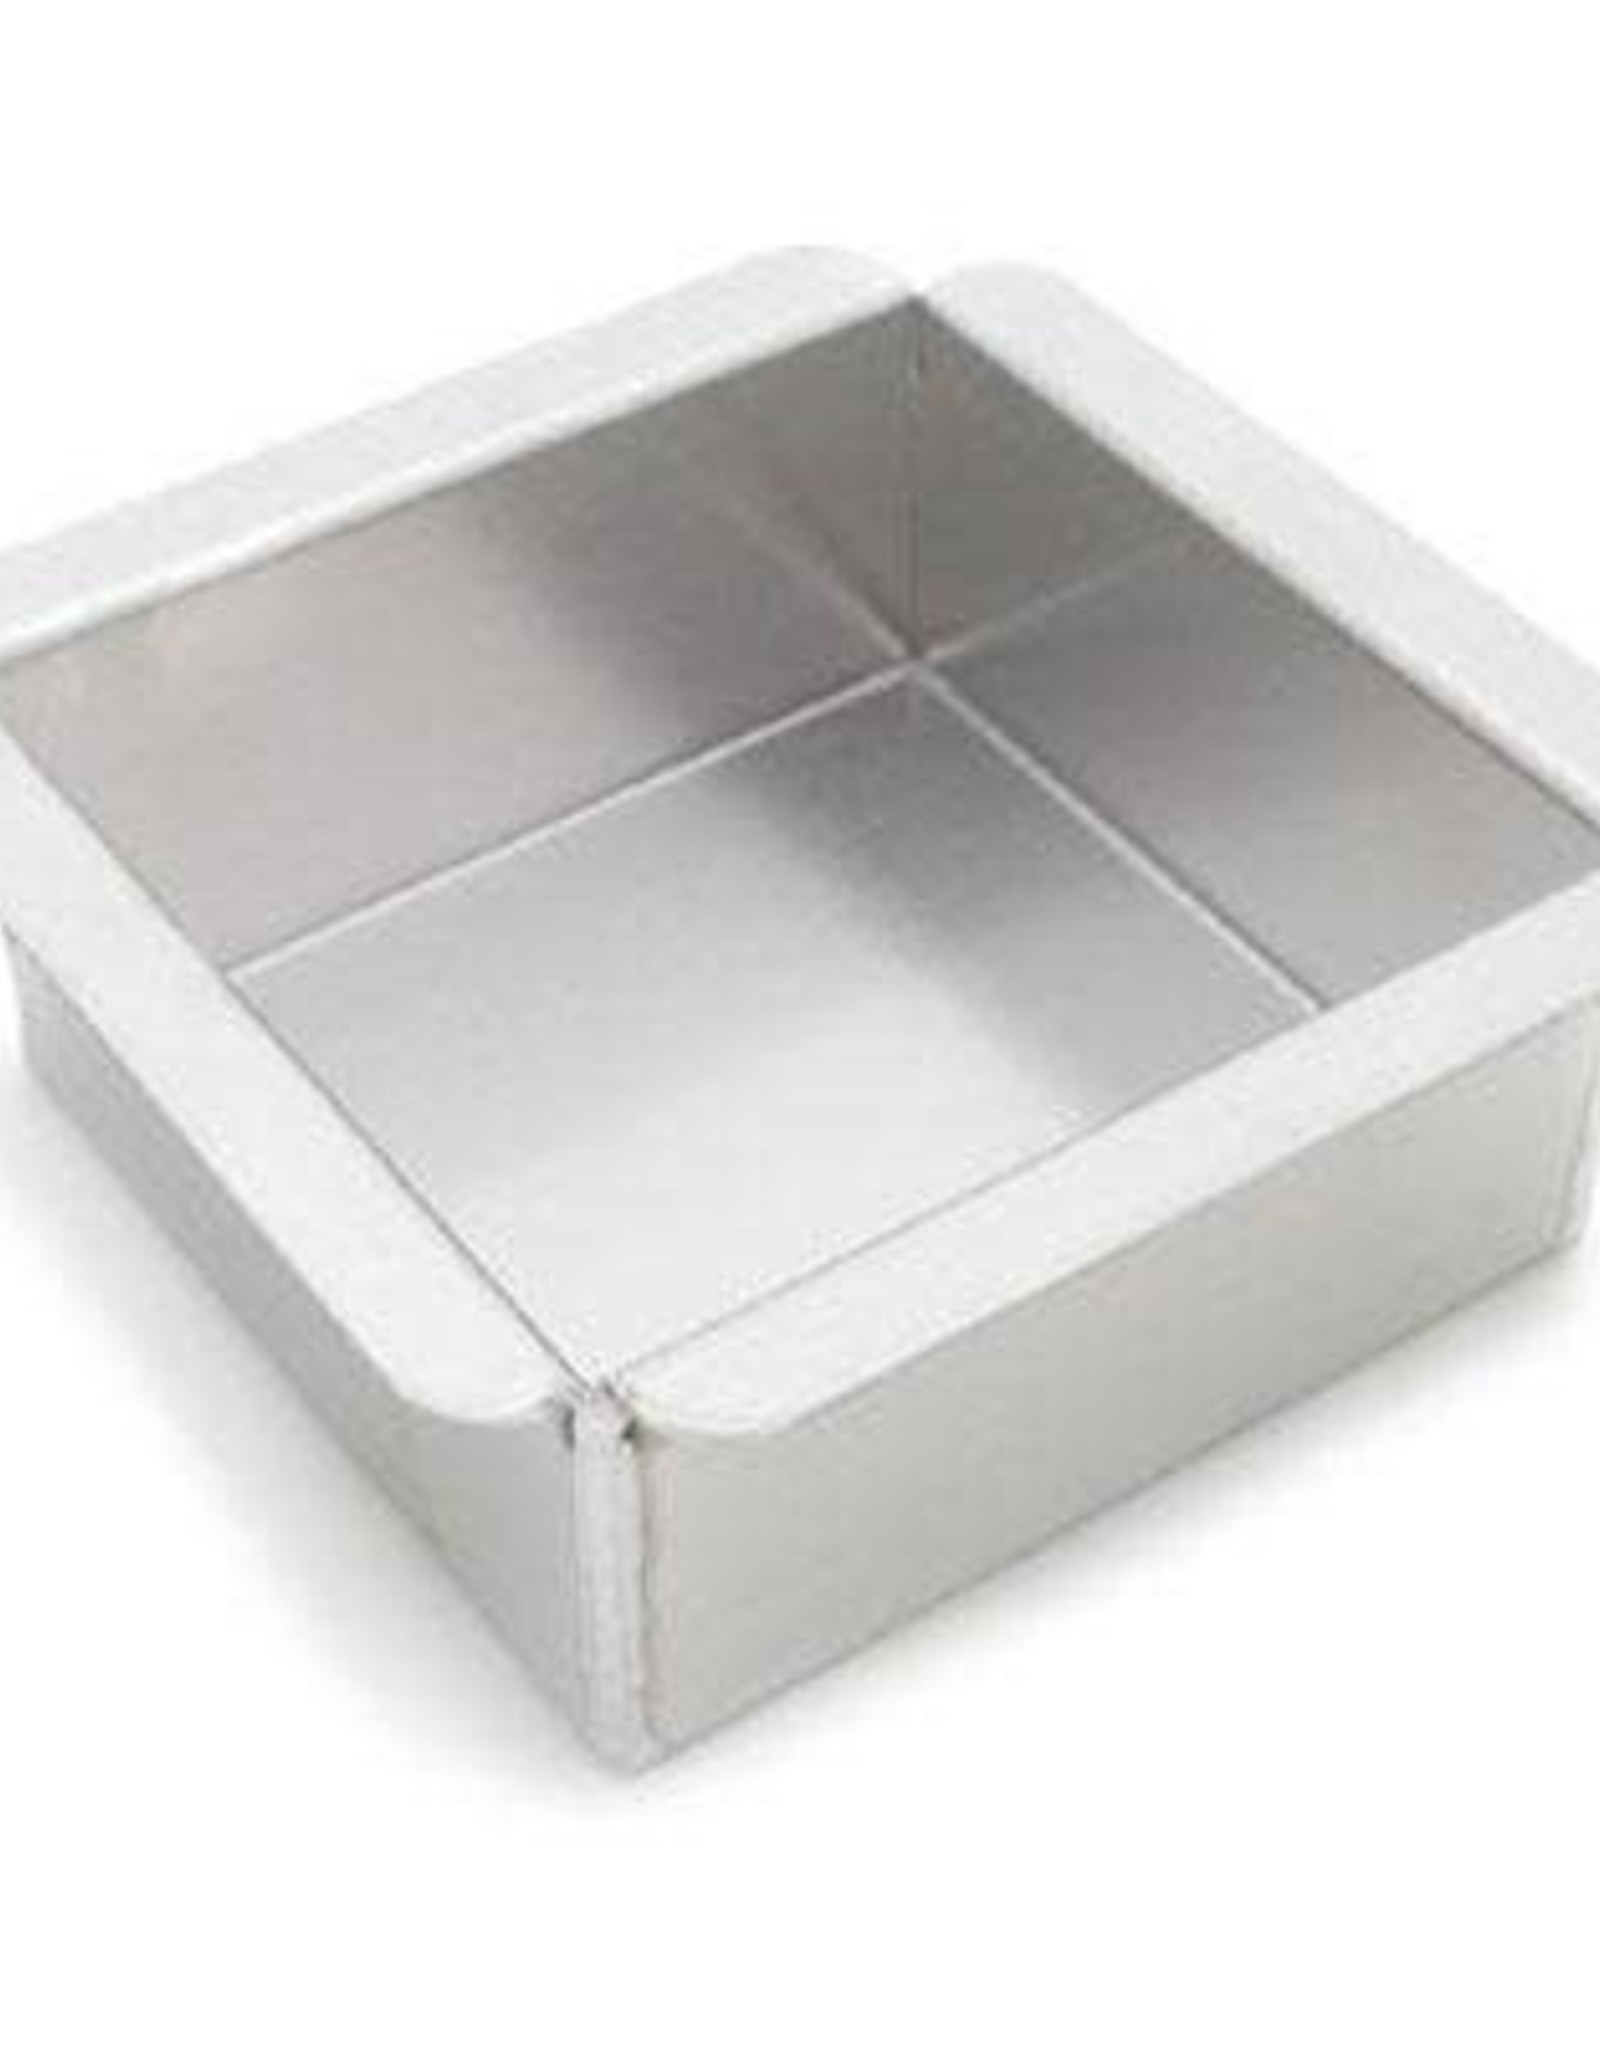 https://cdn.shoplightspeed.com/shops/605789/files/7287345/1600x2048x1/parrish-magic-line-9-x-9-x-3-square-baking-pan.jpg